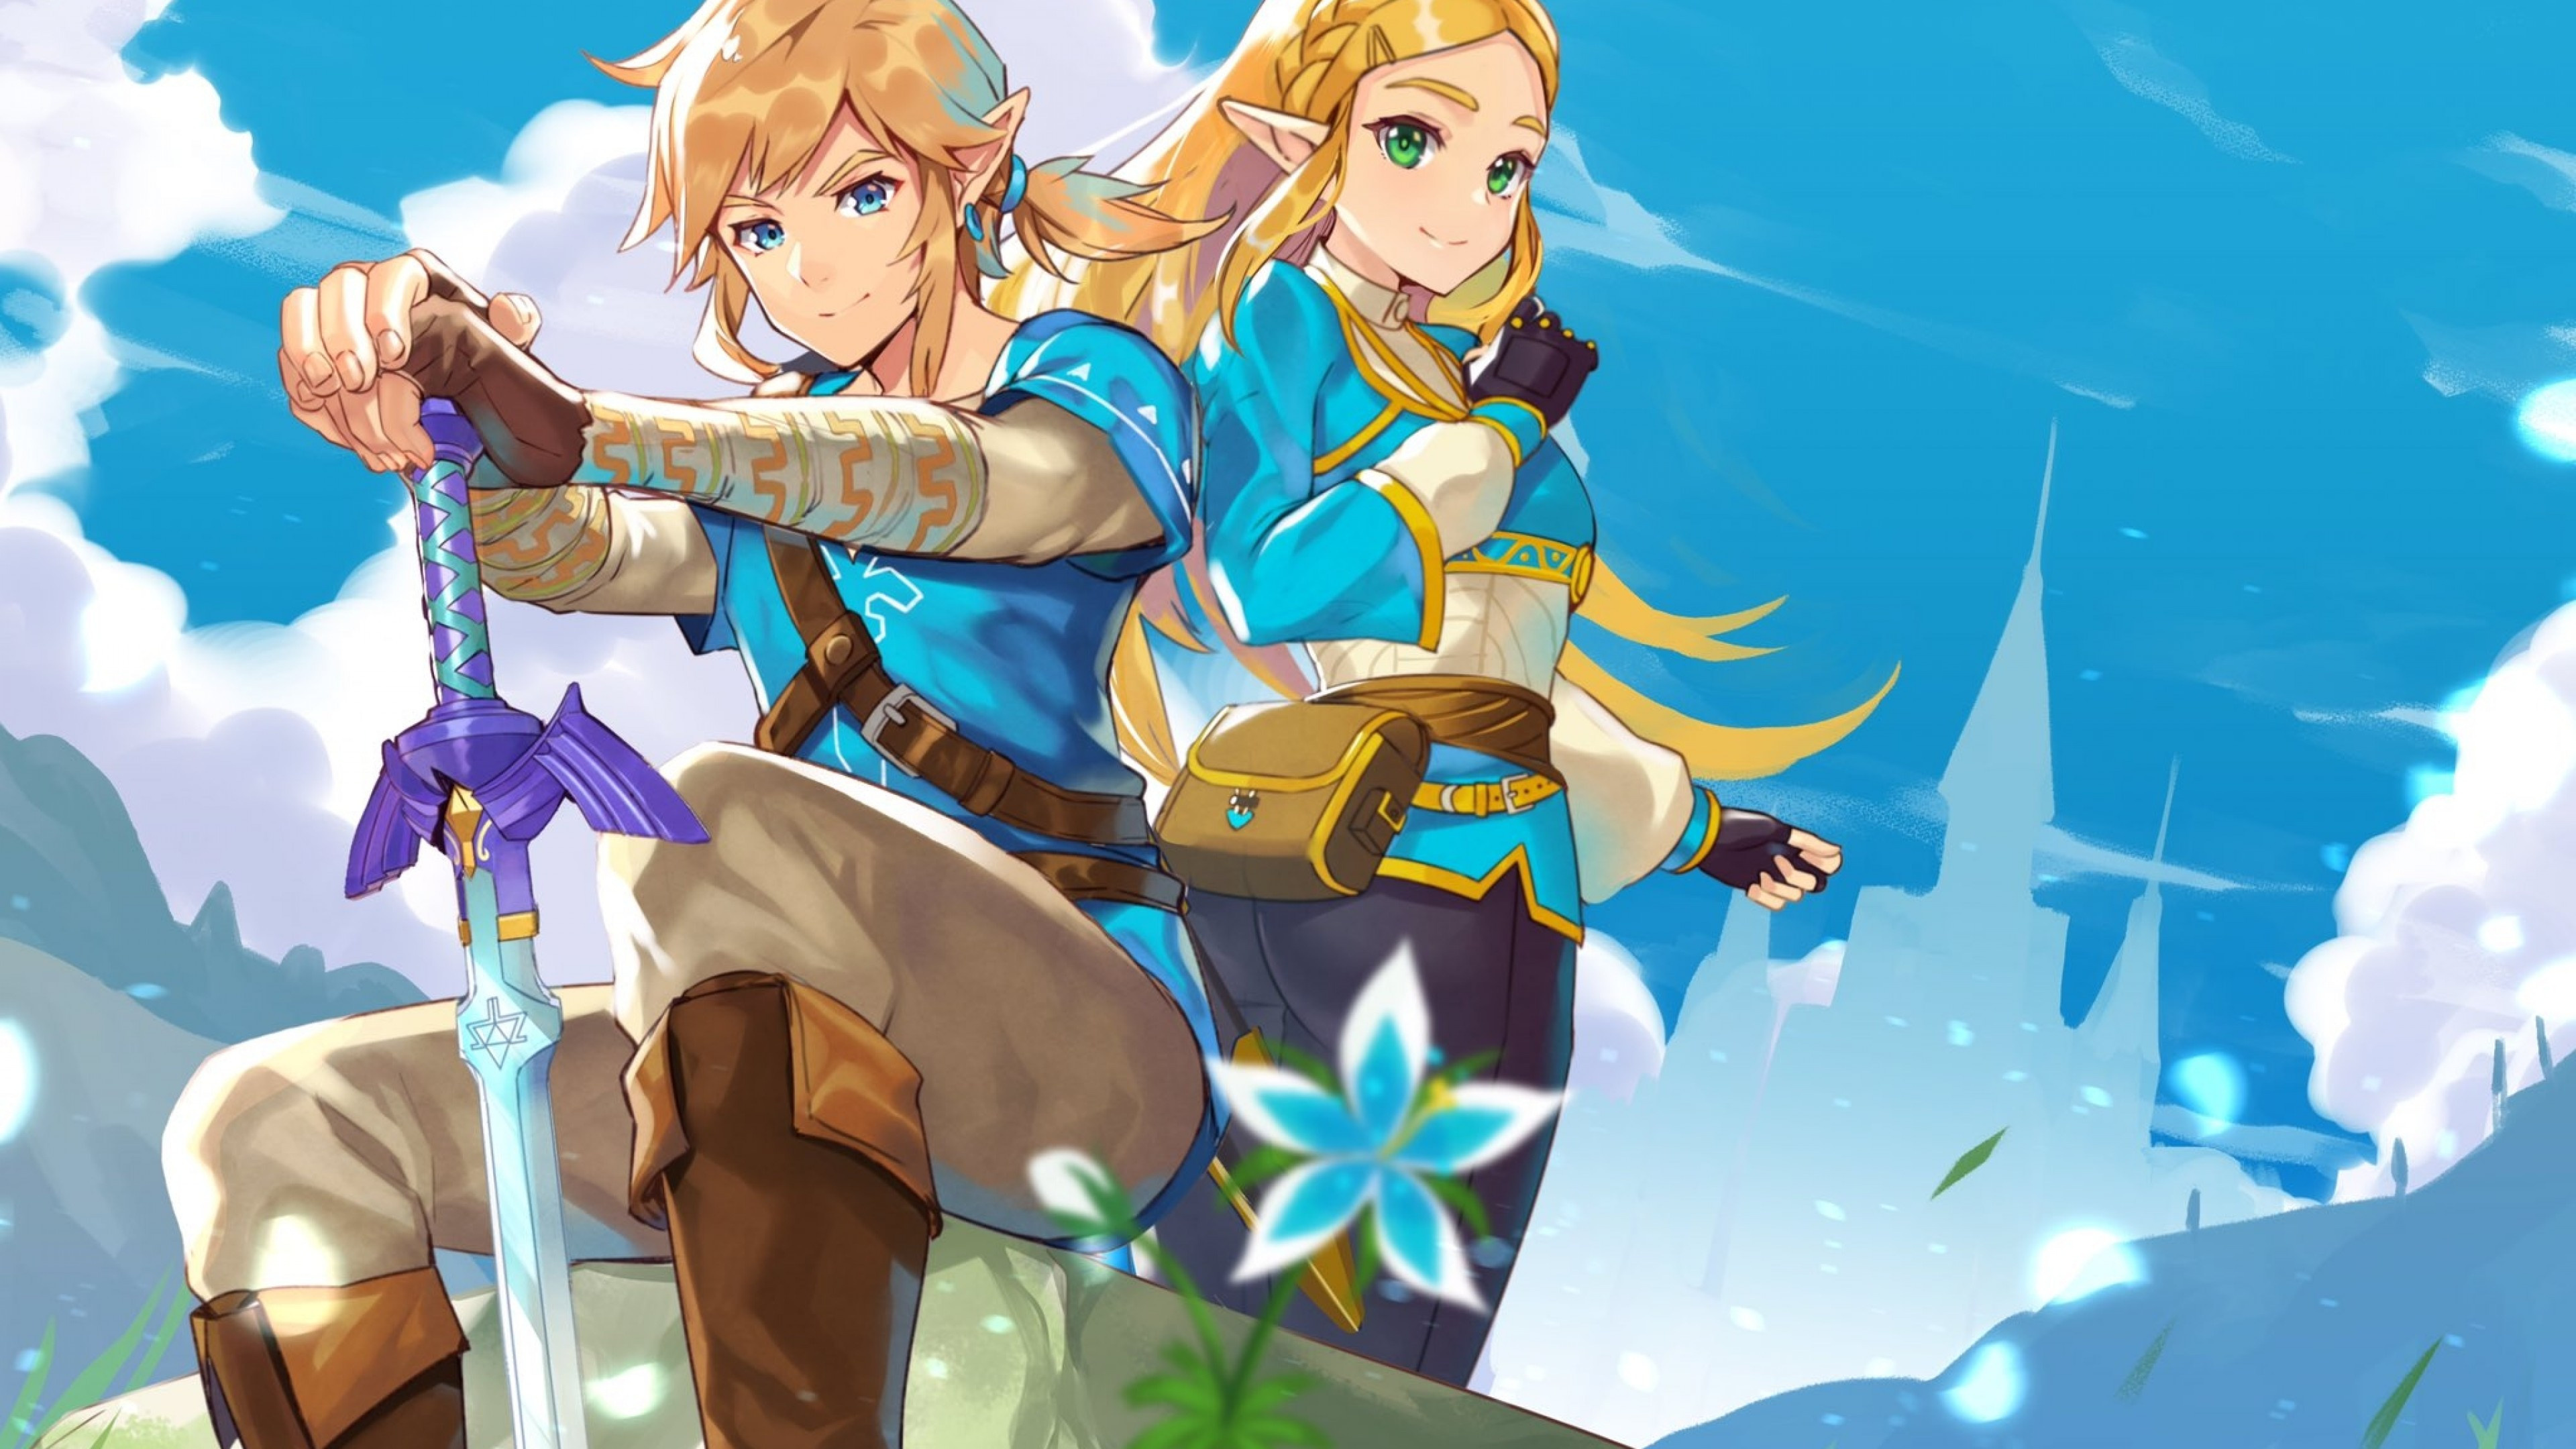 Princess Zelda, Link, Anime style, UHD TV wallpapers, 3840x2160 4K Desktop